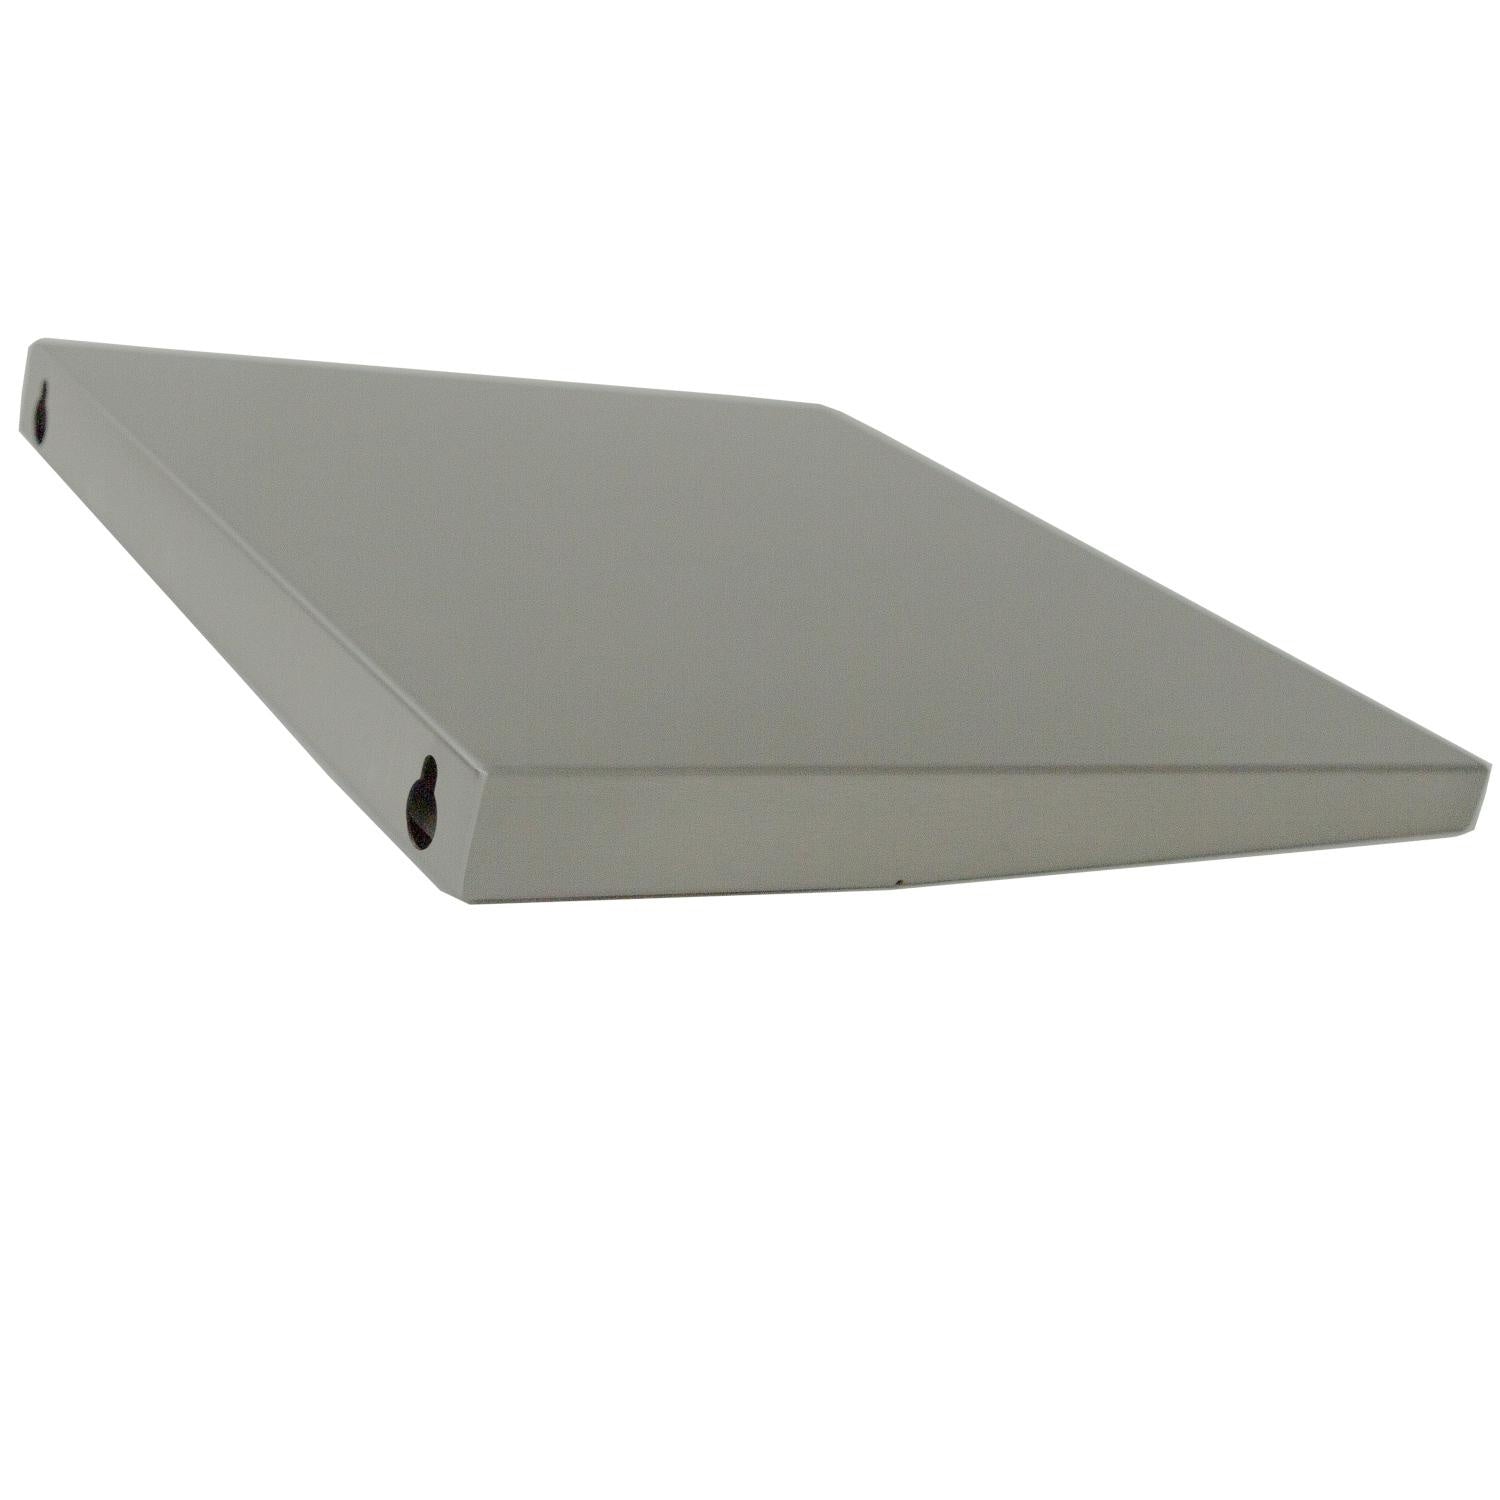 Blaze 17" Portable Grill Pedestal Shelf Kit (Stainless Steel)